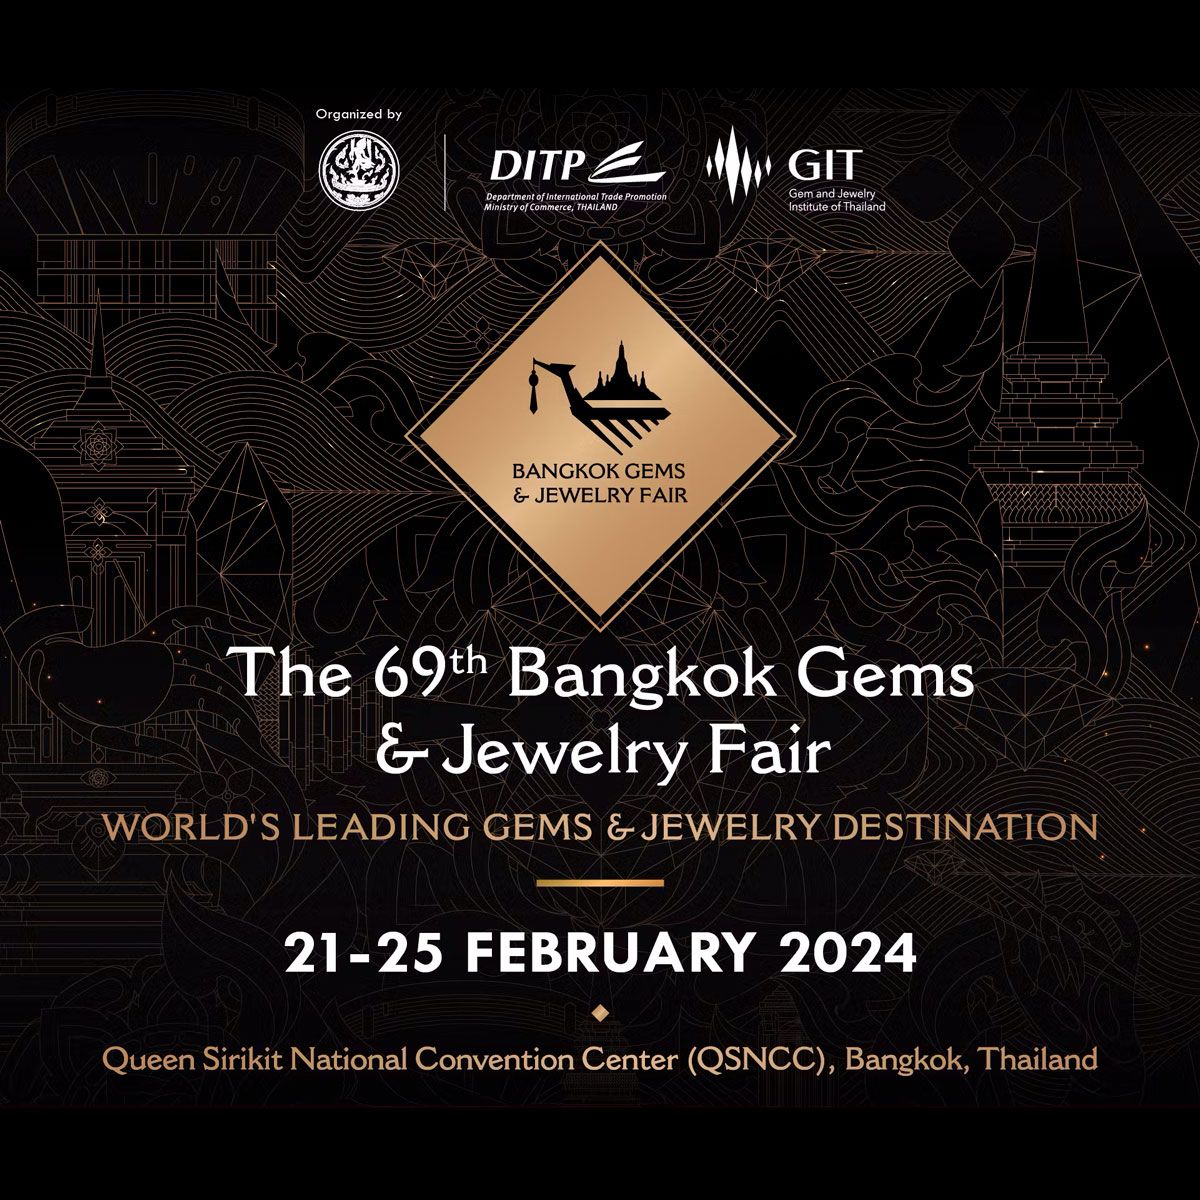 Legor Bangkok Gems and Jewelry Fair